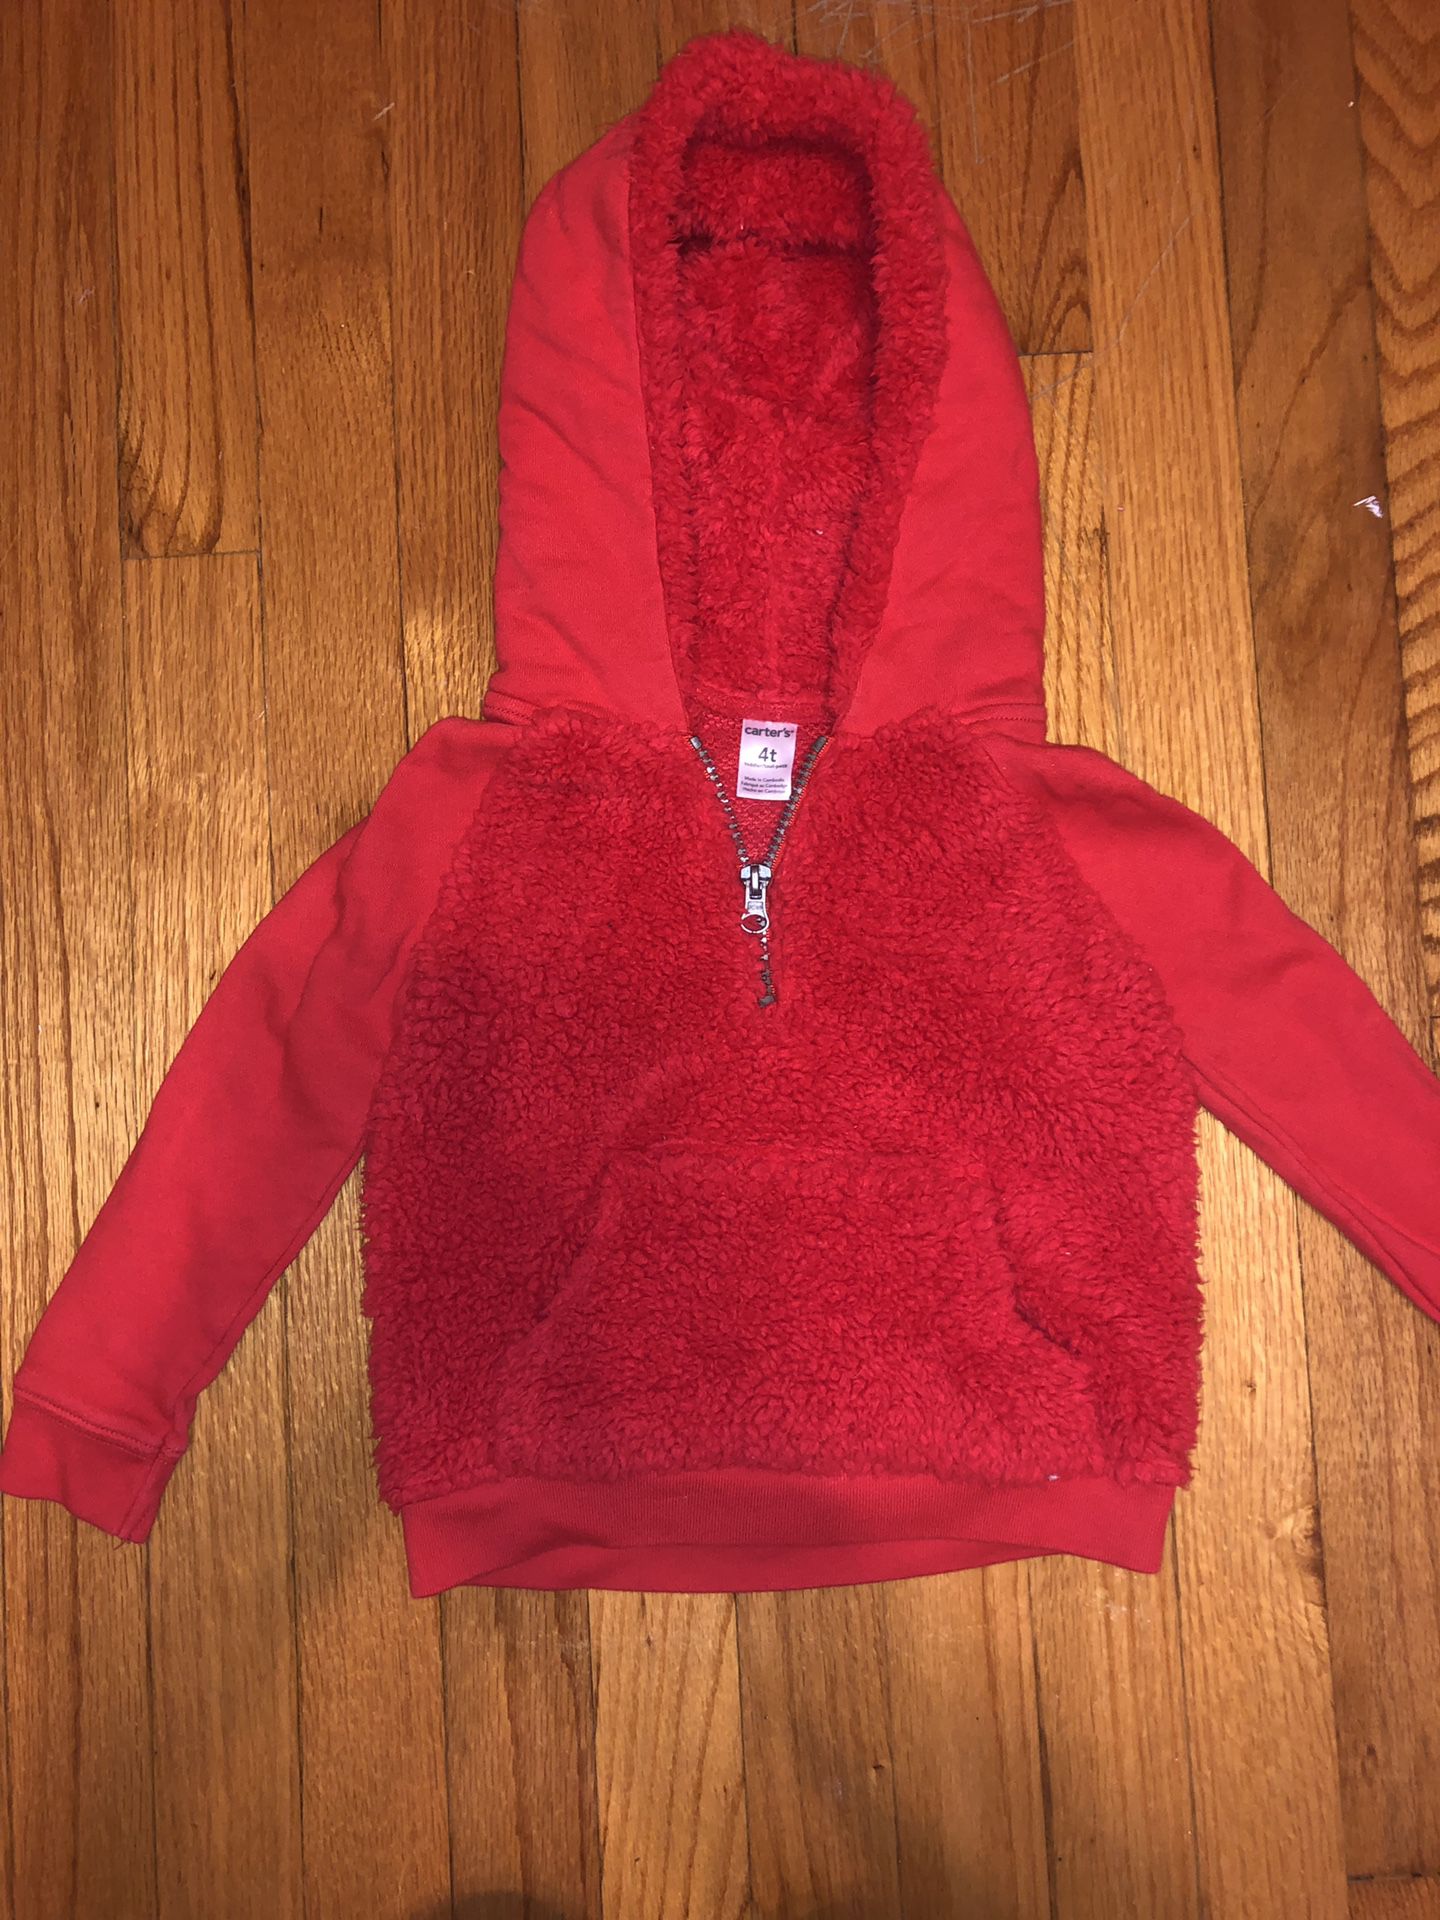 Carter’s 4T fleece lined sweater